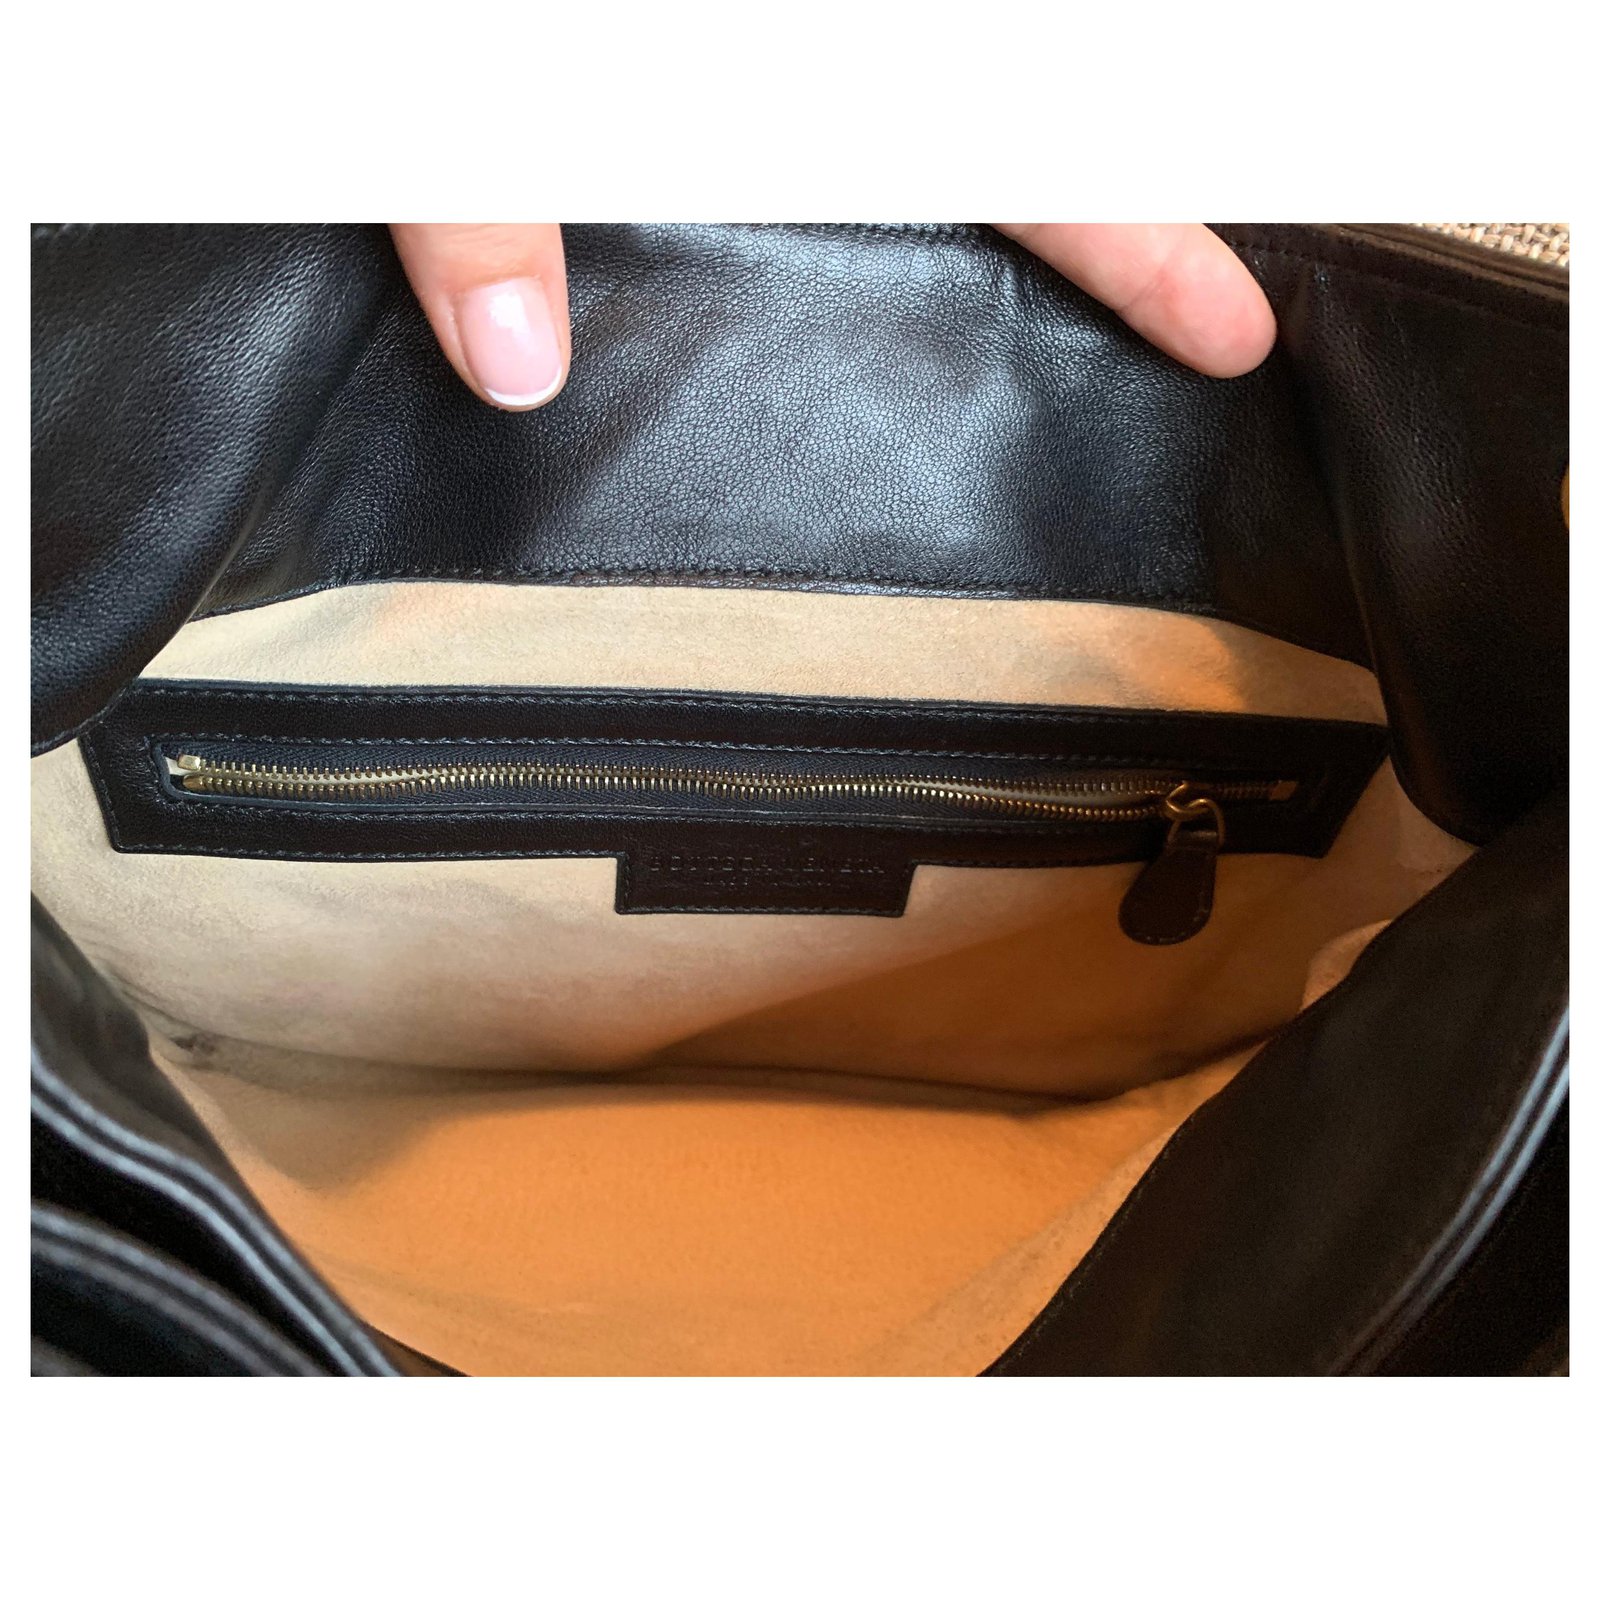 BOTTEGA VENETA: bag in woven leather - Black  Bottega Veneta bags 641021  V05J1 online at